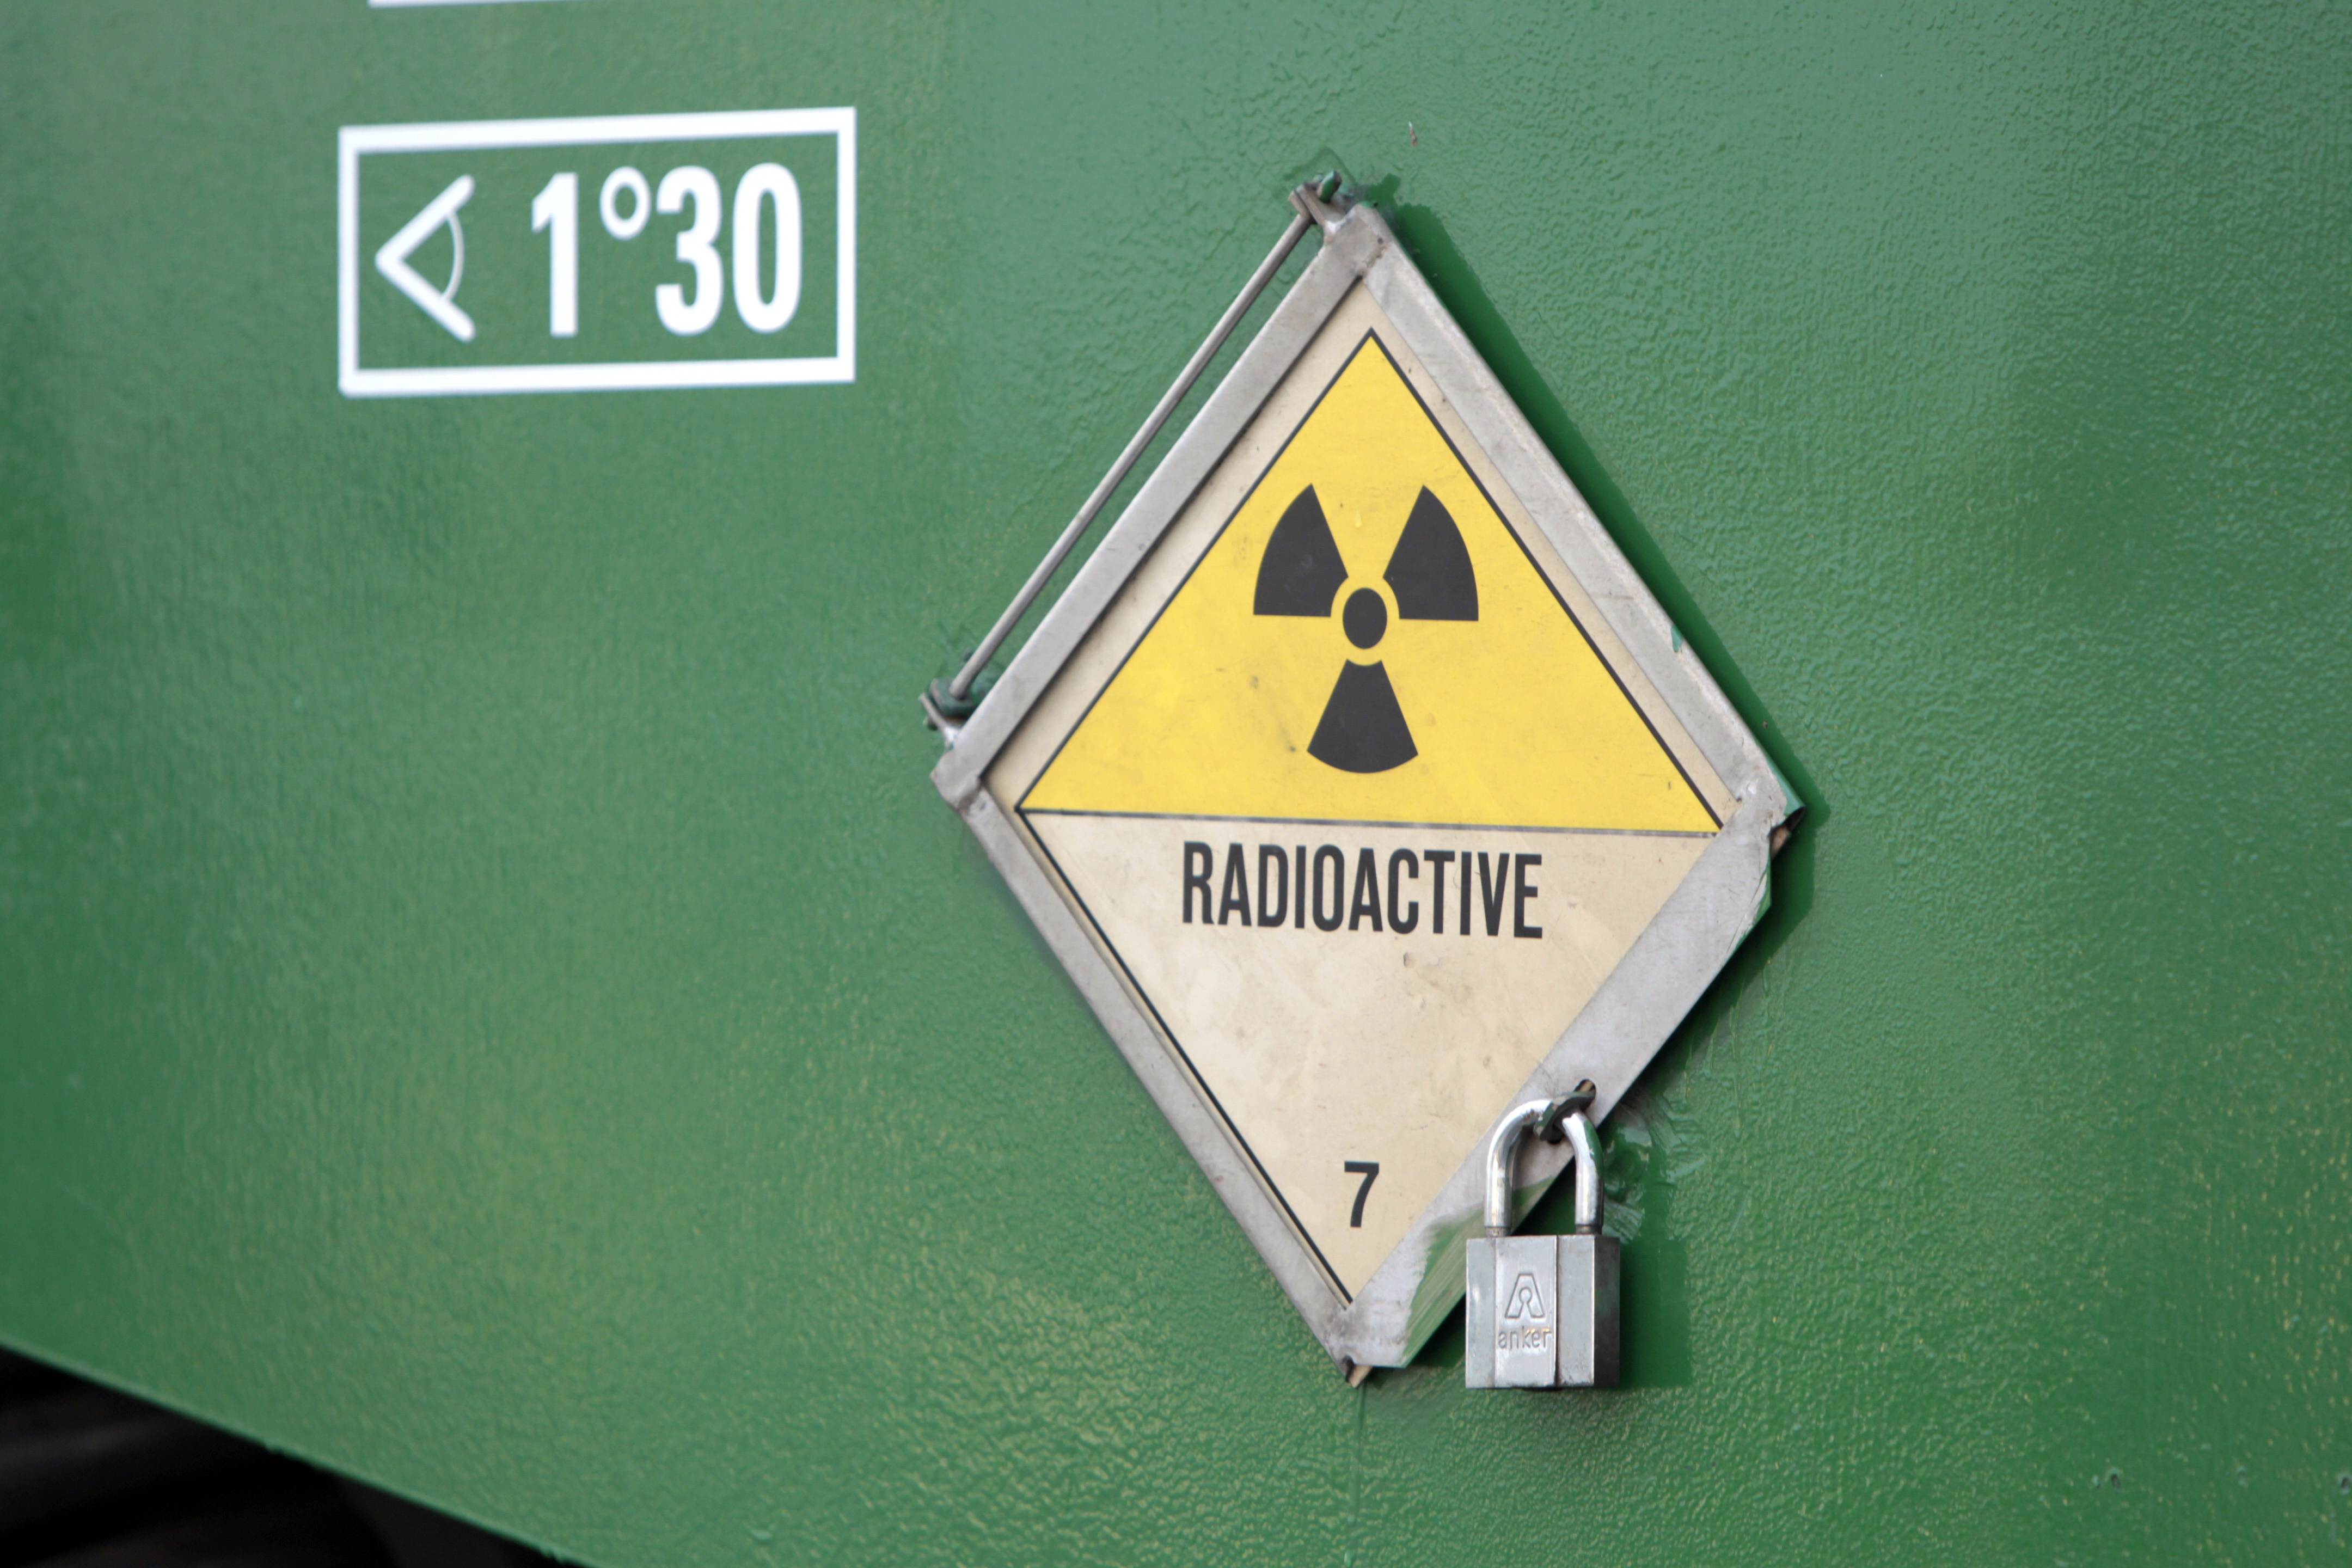 Radioactive waste found at elementary school near World War II nuclear  facility